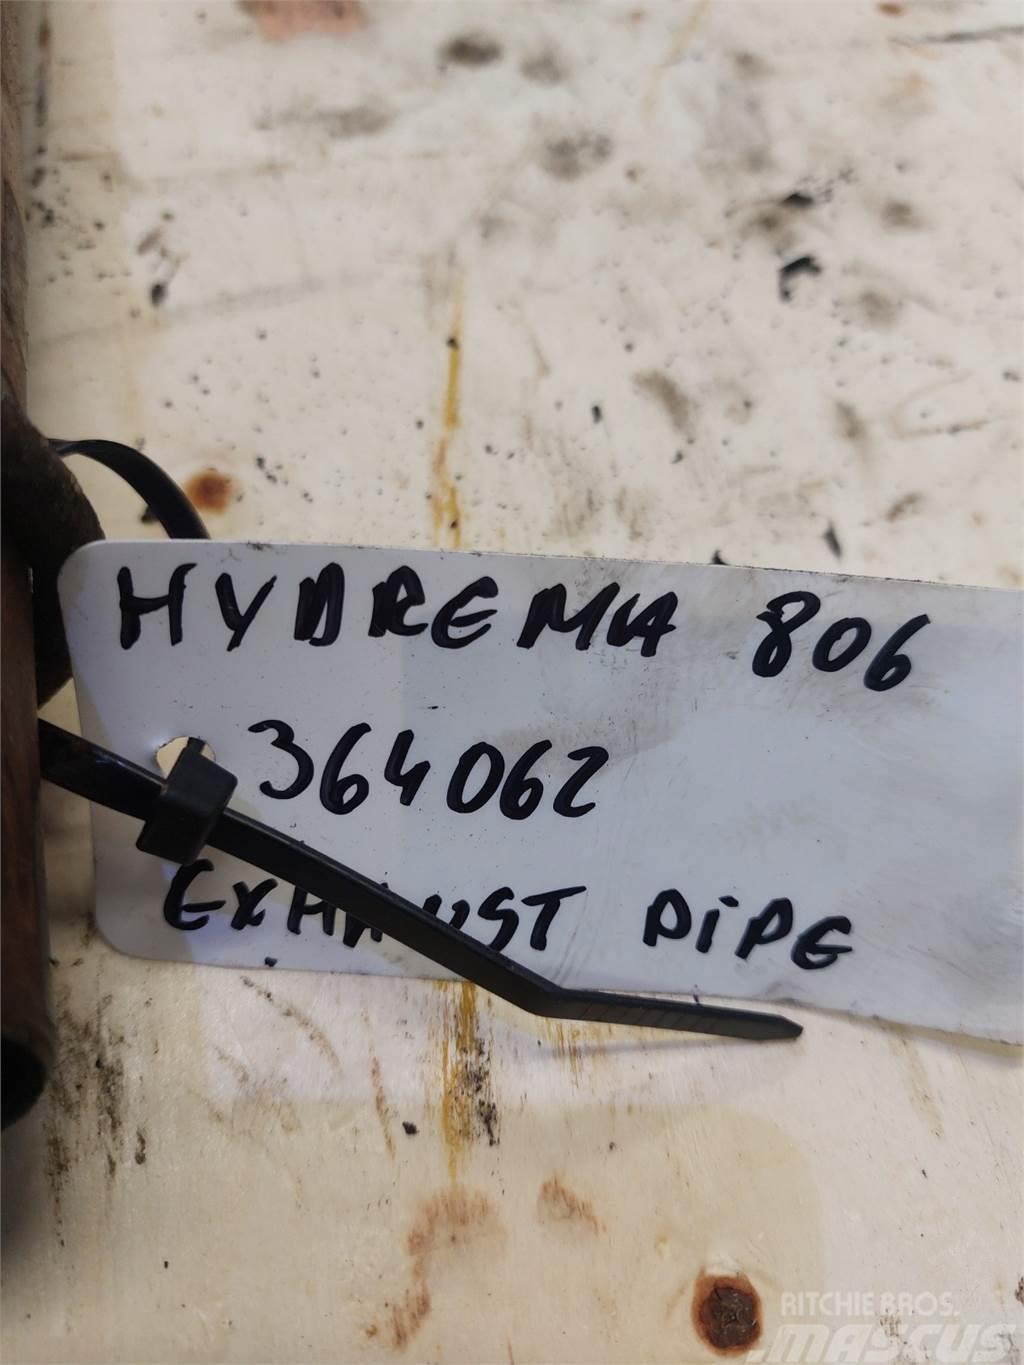 Hydrema 806 Silniki